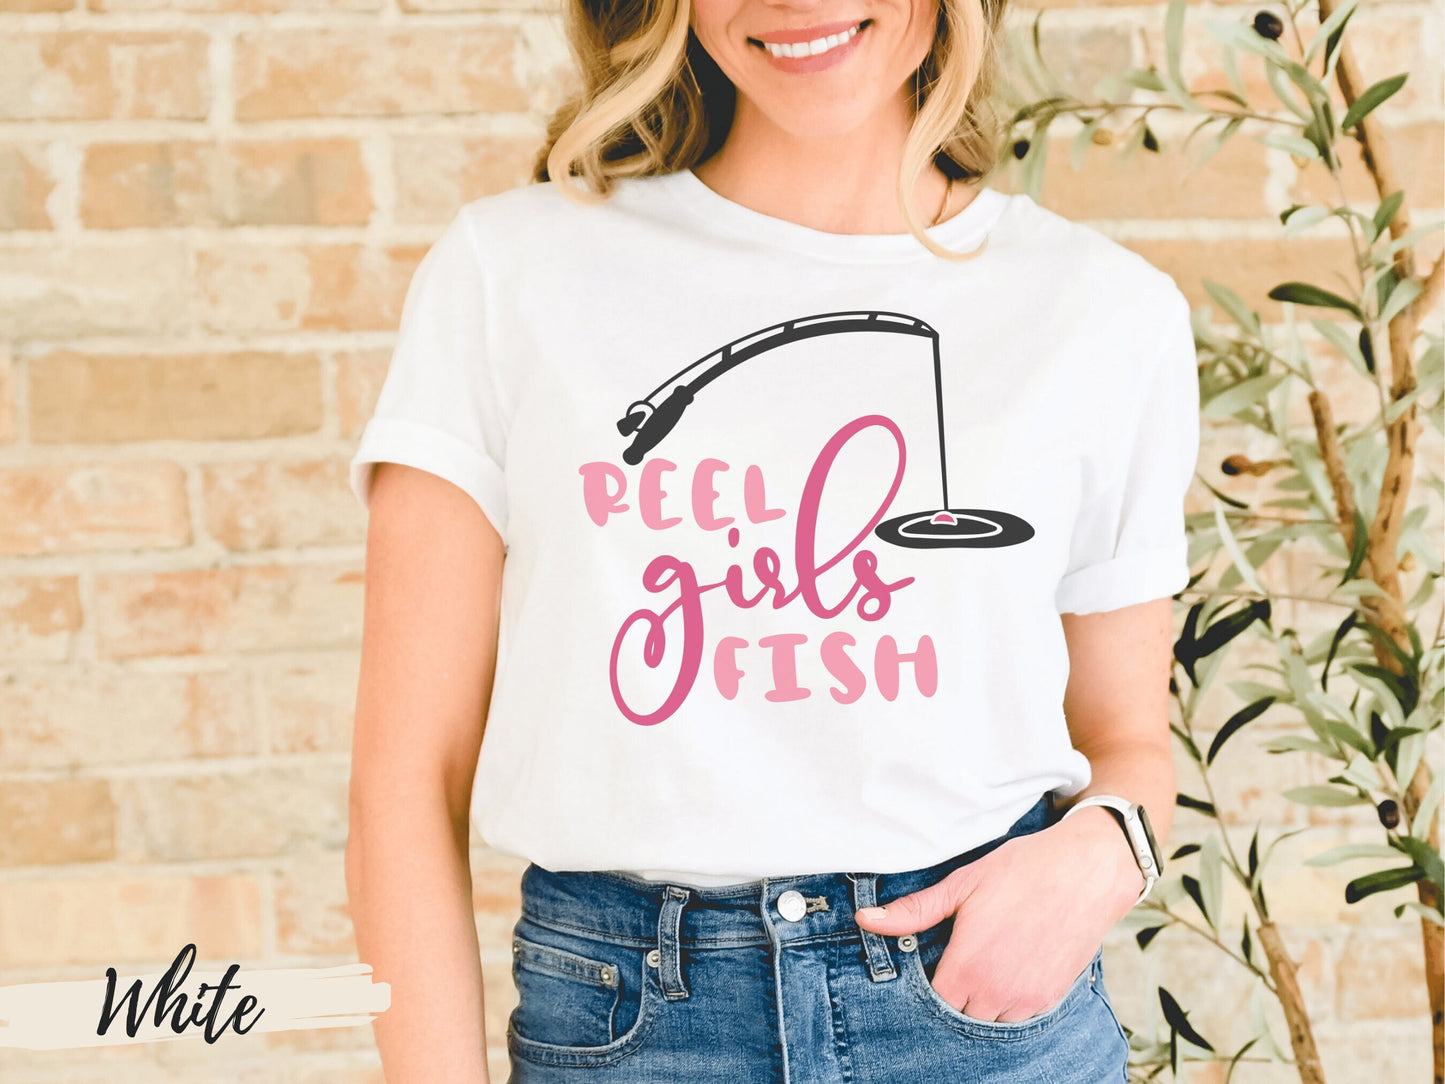 Reel Women Fish, Girls Who Fish, Fisherwoman Shirt, Fisherwoman Gift, Gift for Girls Who Fish, Gift for Fisherwoman, Fishing Girls Gift